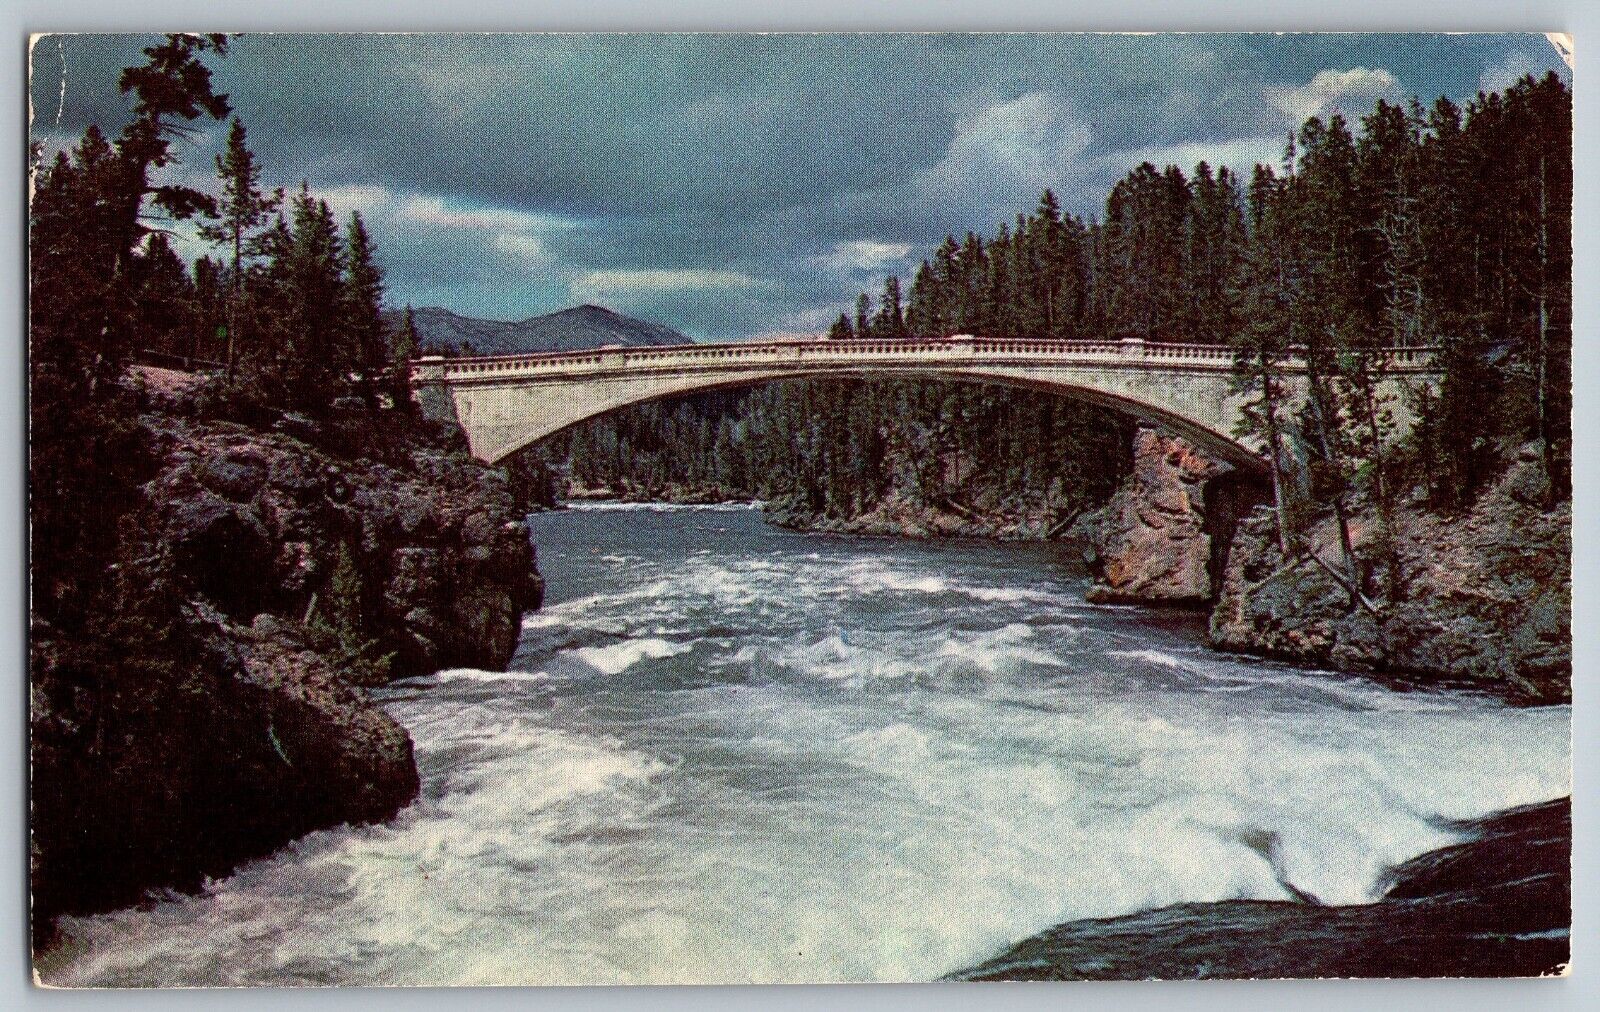 Chittenden Bridge 120 Foot at Yellowstone National Park - Vintage Postcards